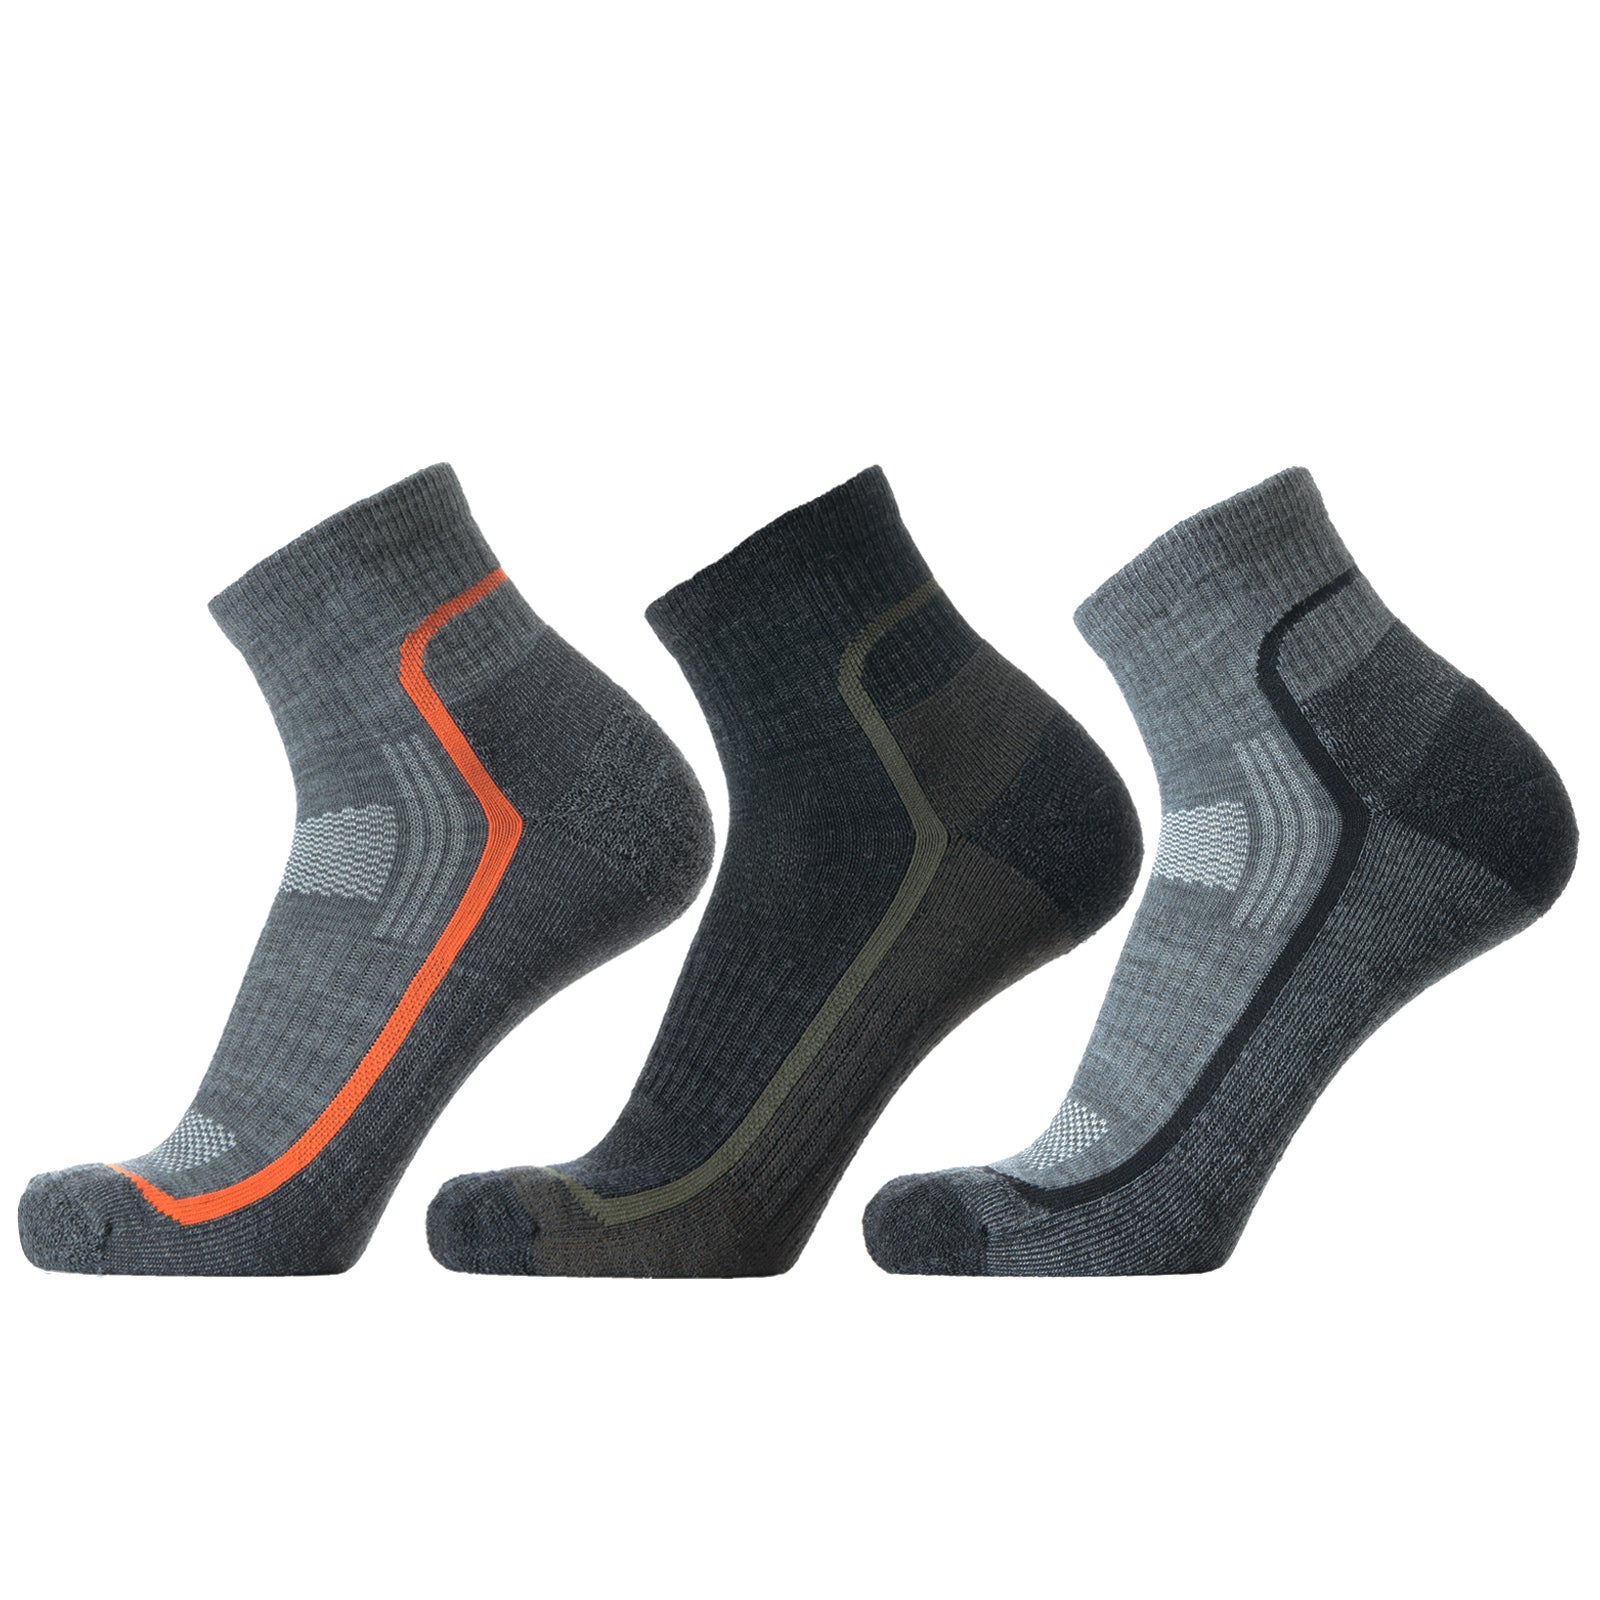 SOLAX 3 pairs Man's Merino wool Quarter socks